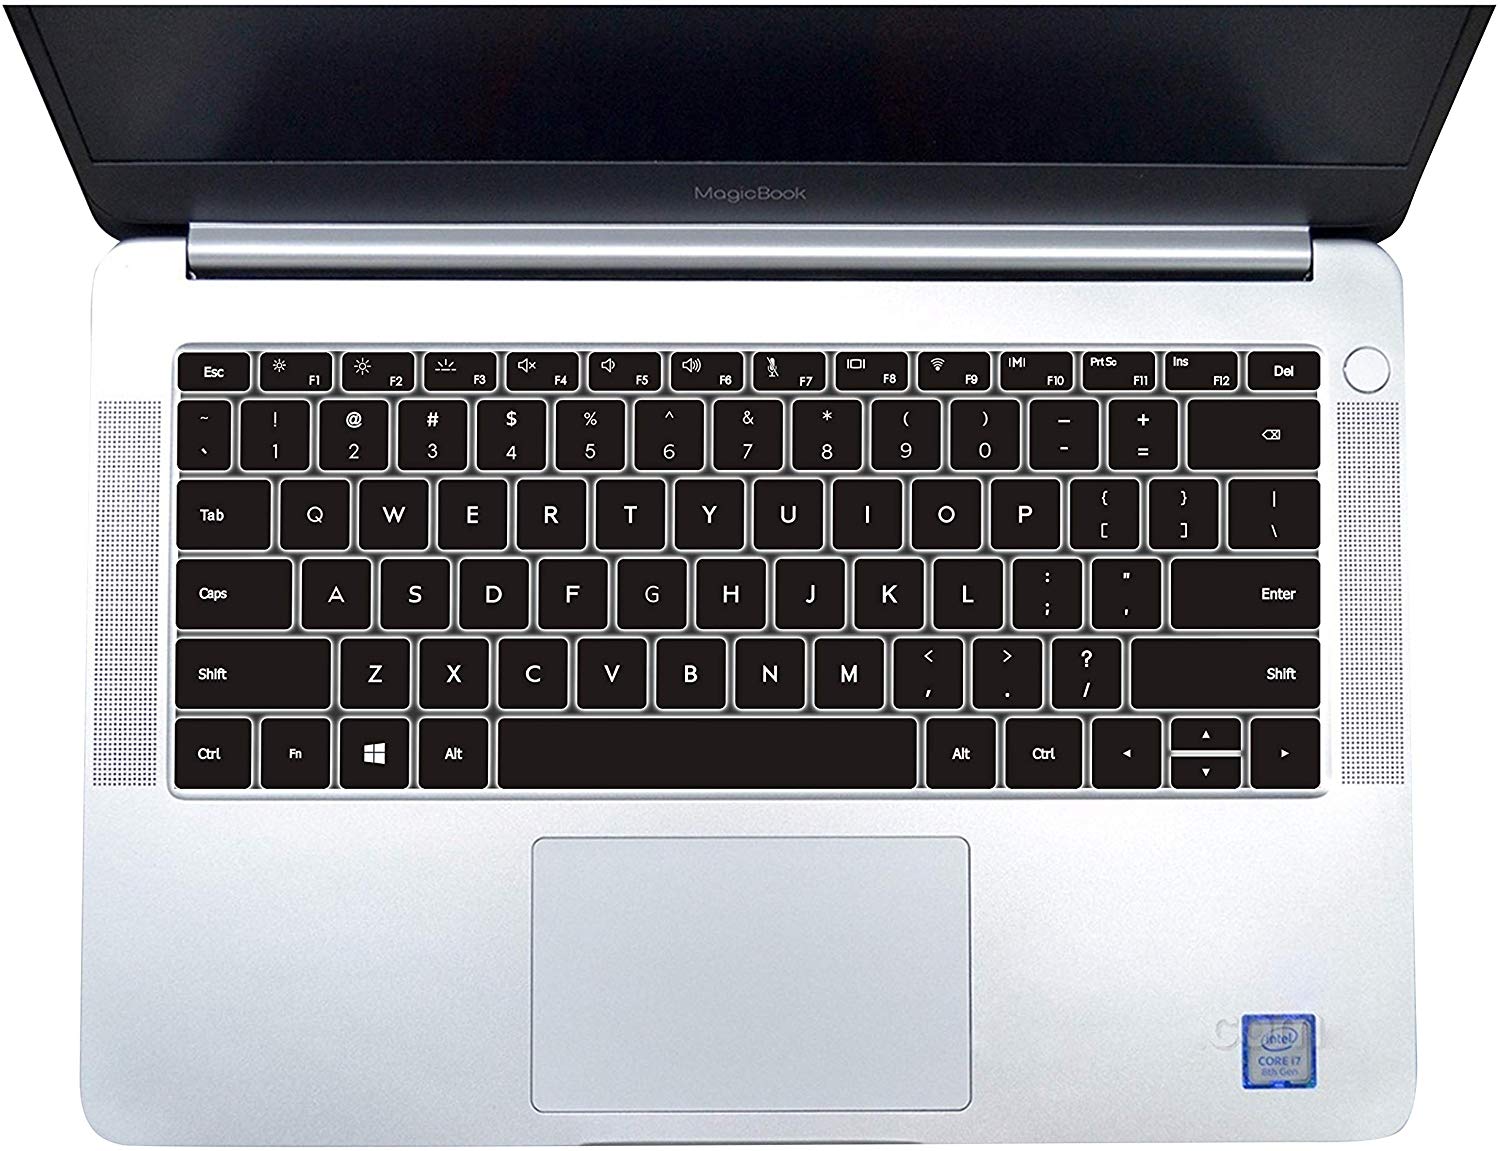 Silicone Keyboard Skin Cover for Huawei MateBook 13